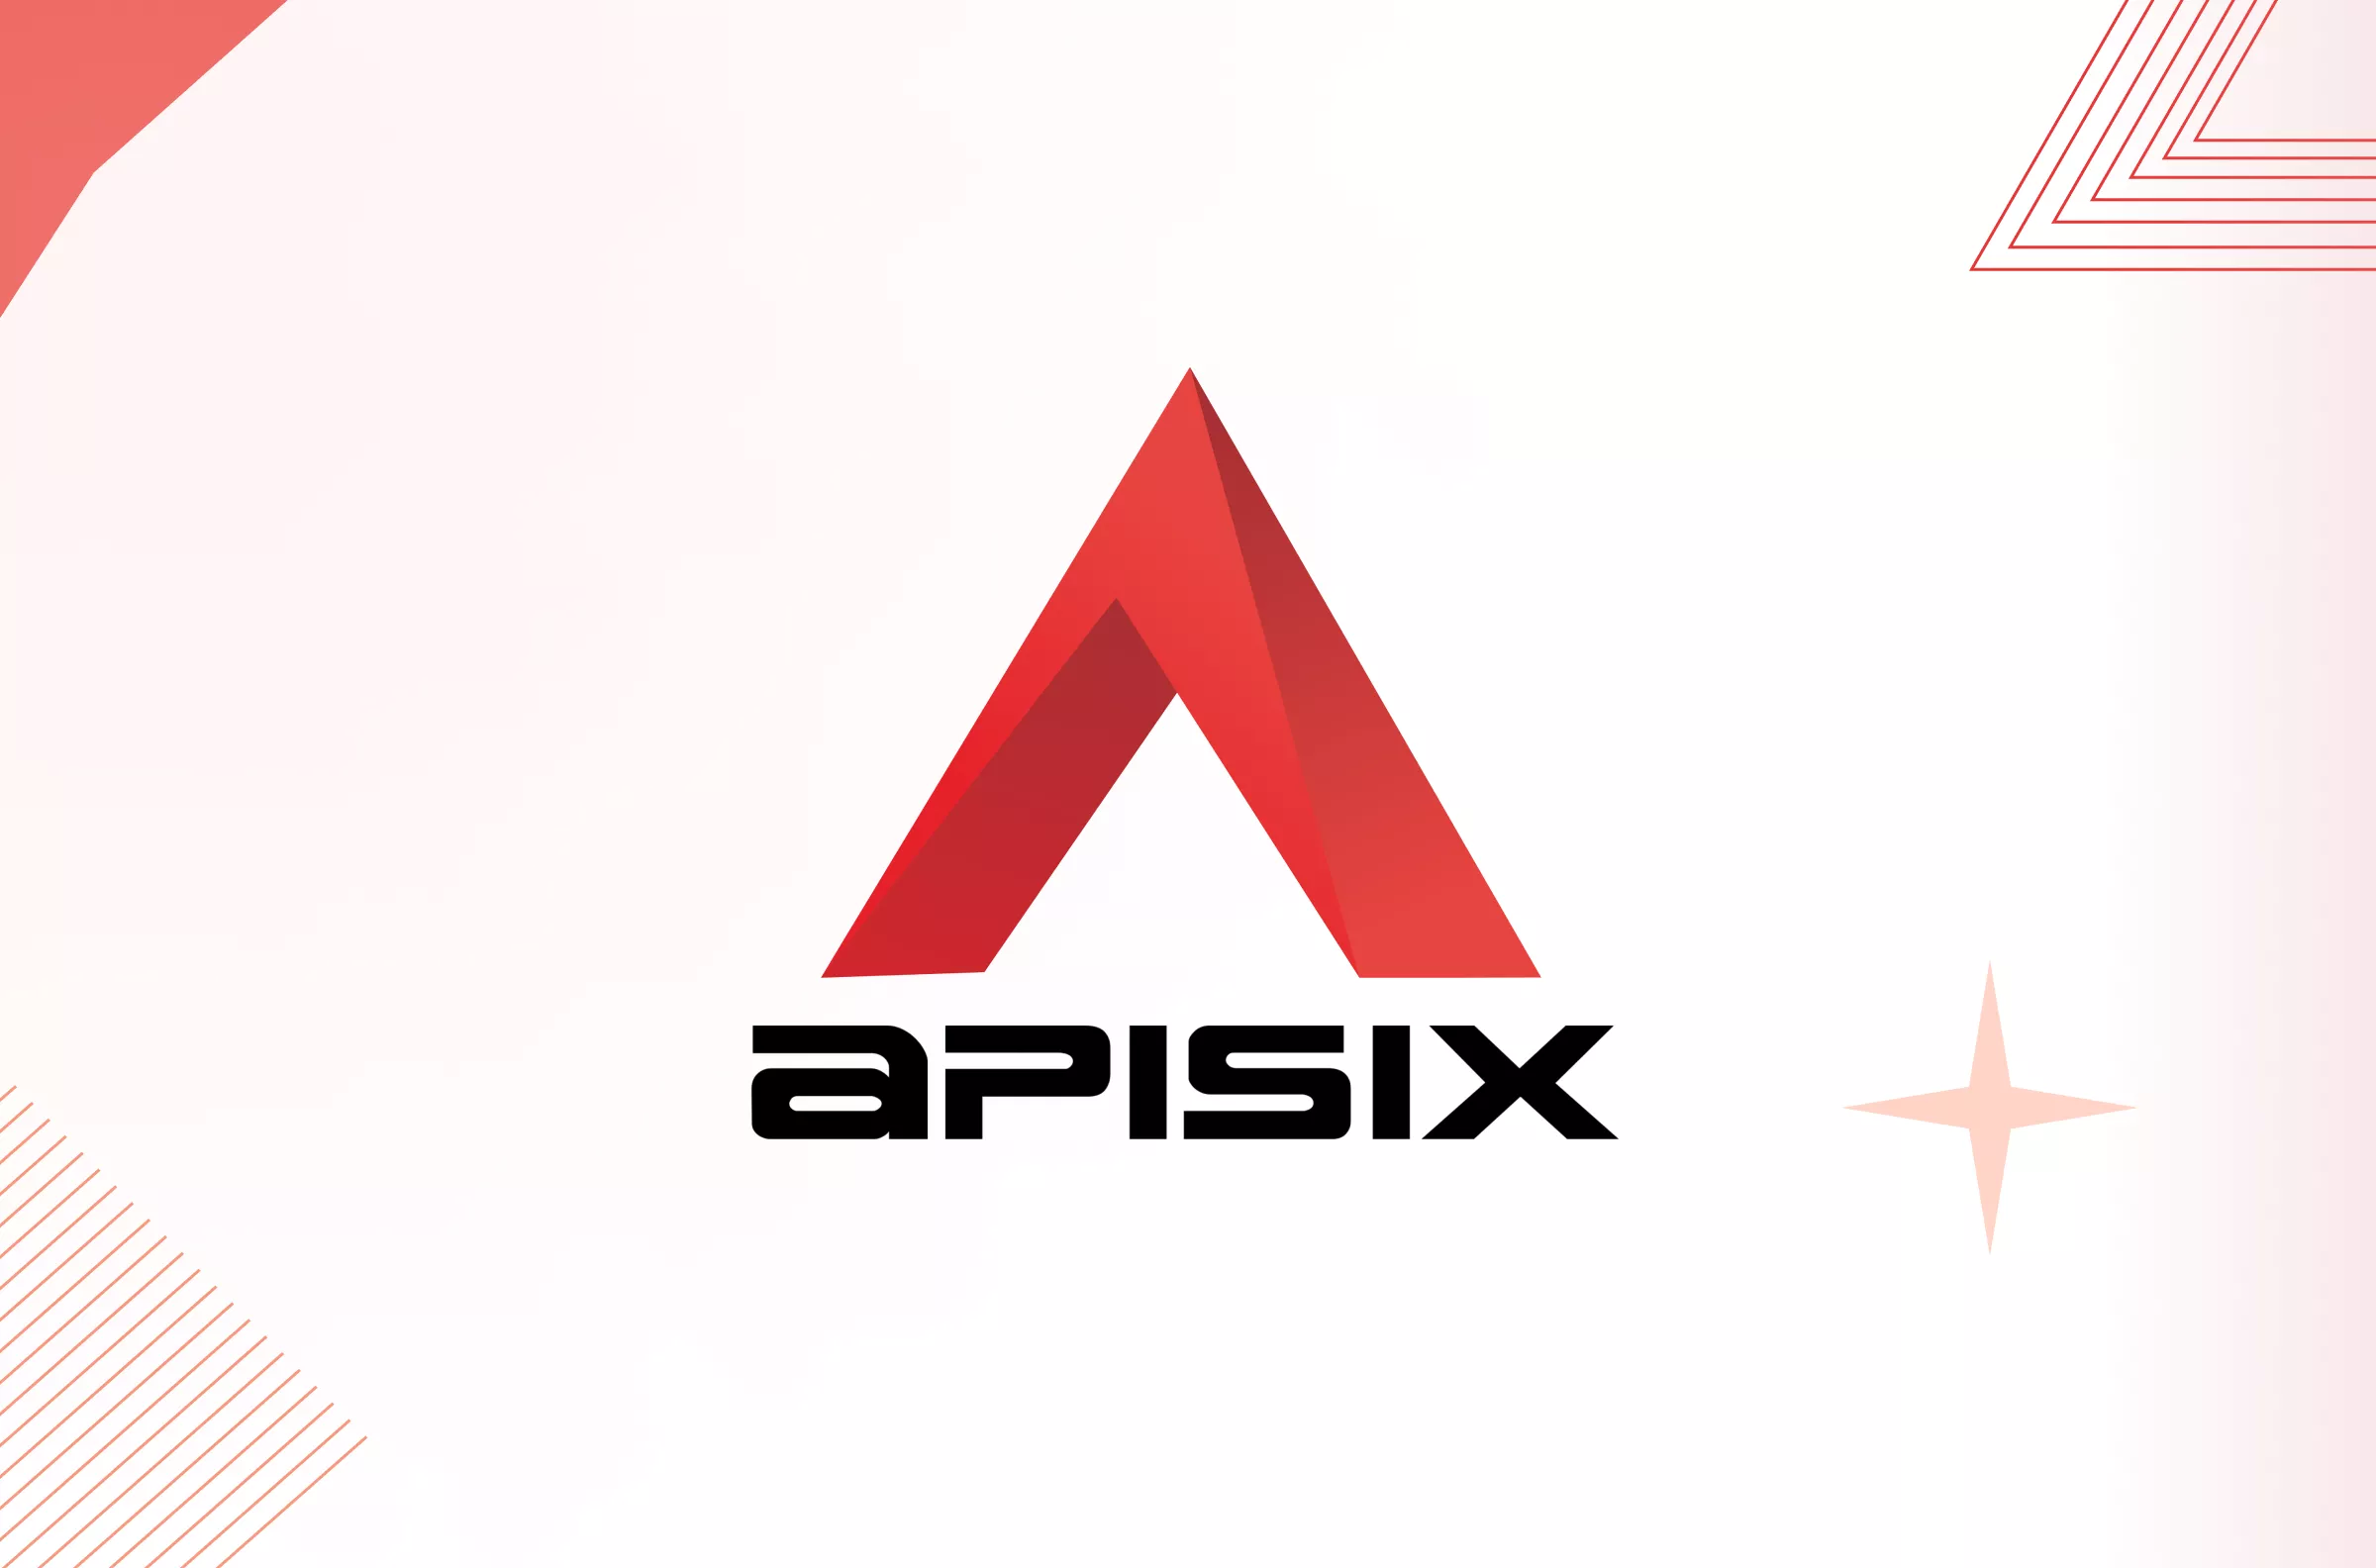 Why Is Apache APISIX the Best API Gateway?